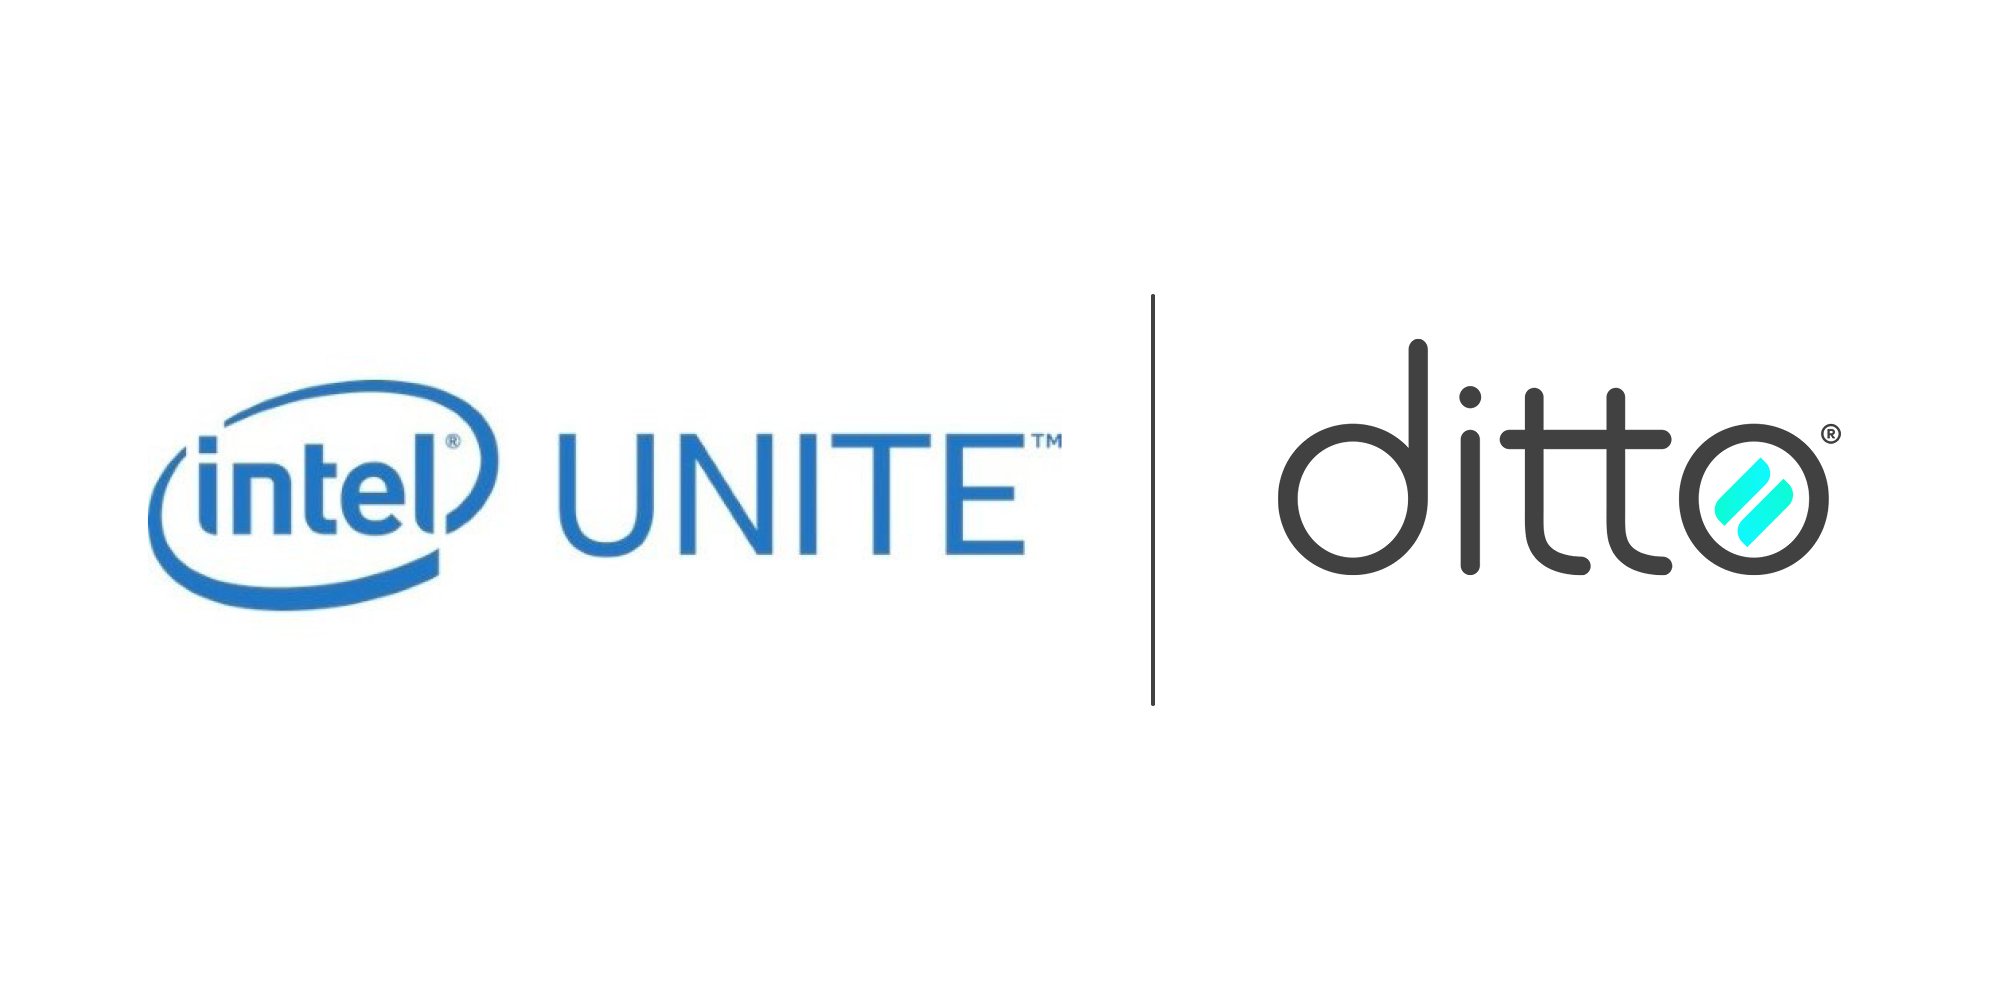 Intel Unite and Ditto logos